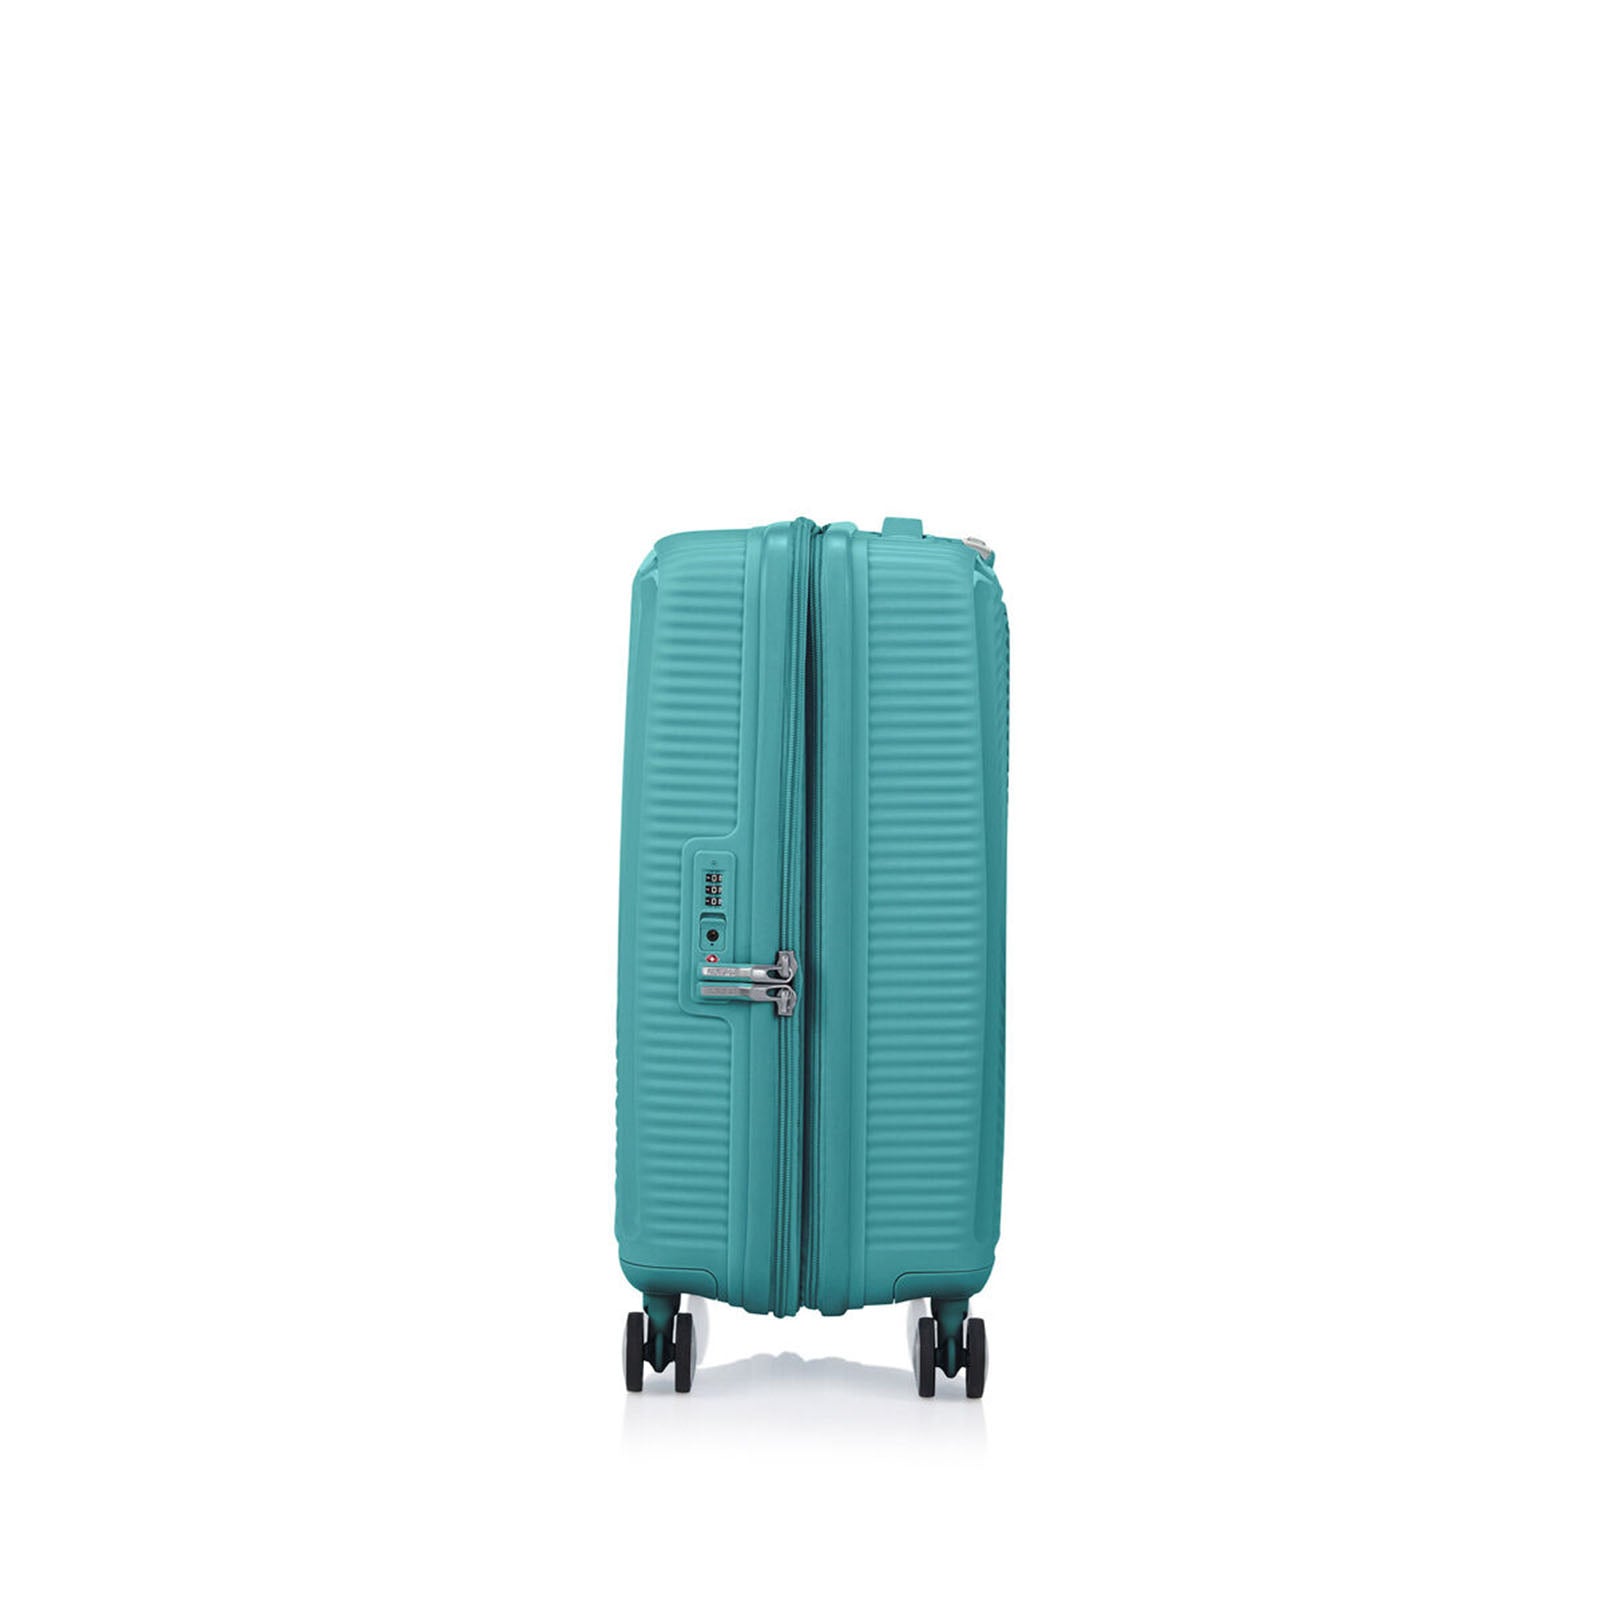 American-Tourister-Curio-2-55cm-Carry-On-Suitcase-Jade-Green-Lock